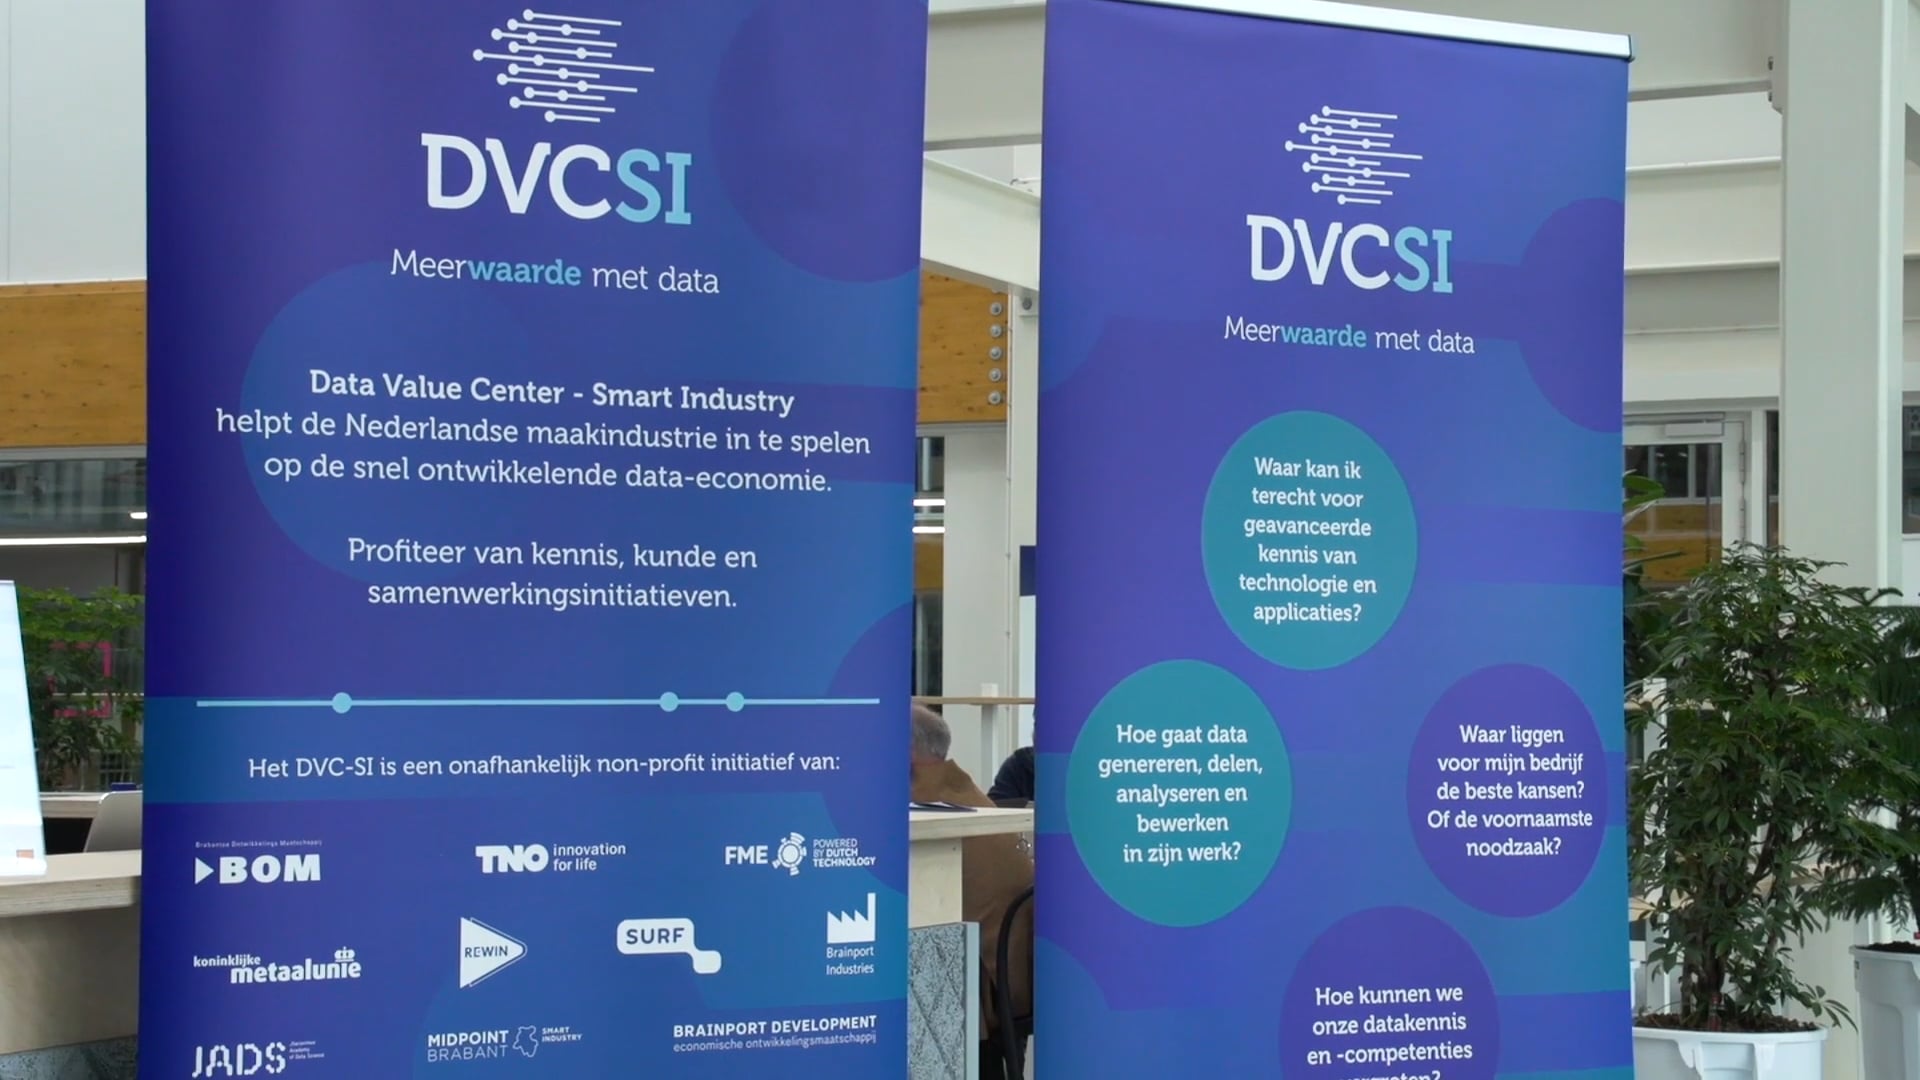 Data Value Center - Smart Industry 2019 AFTERMOVIE